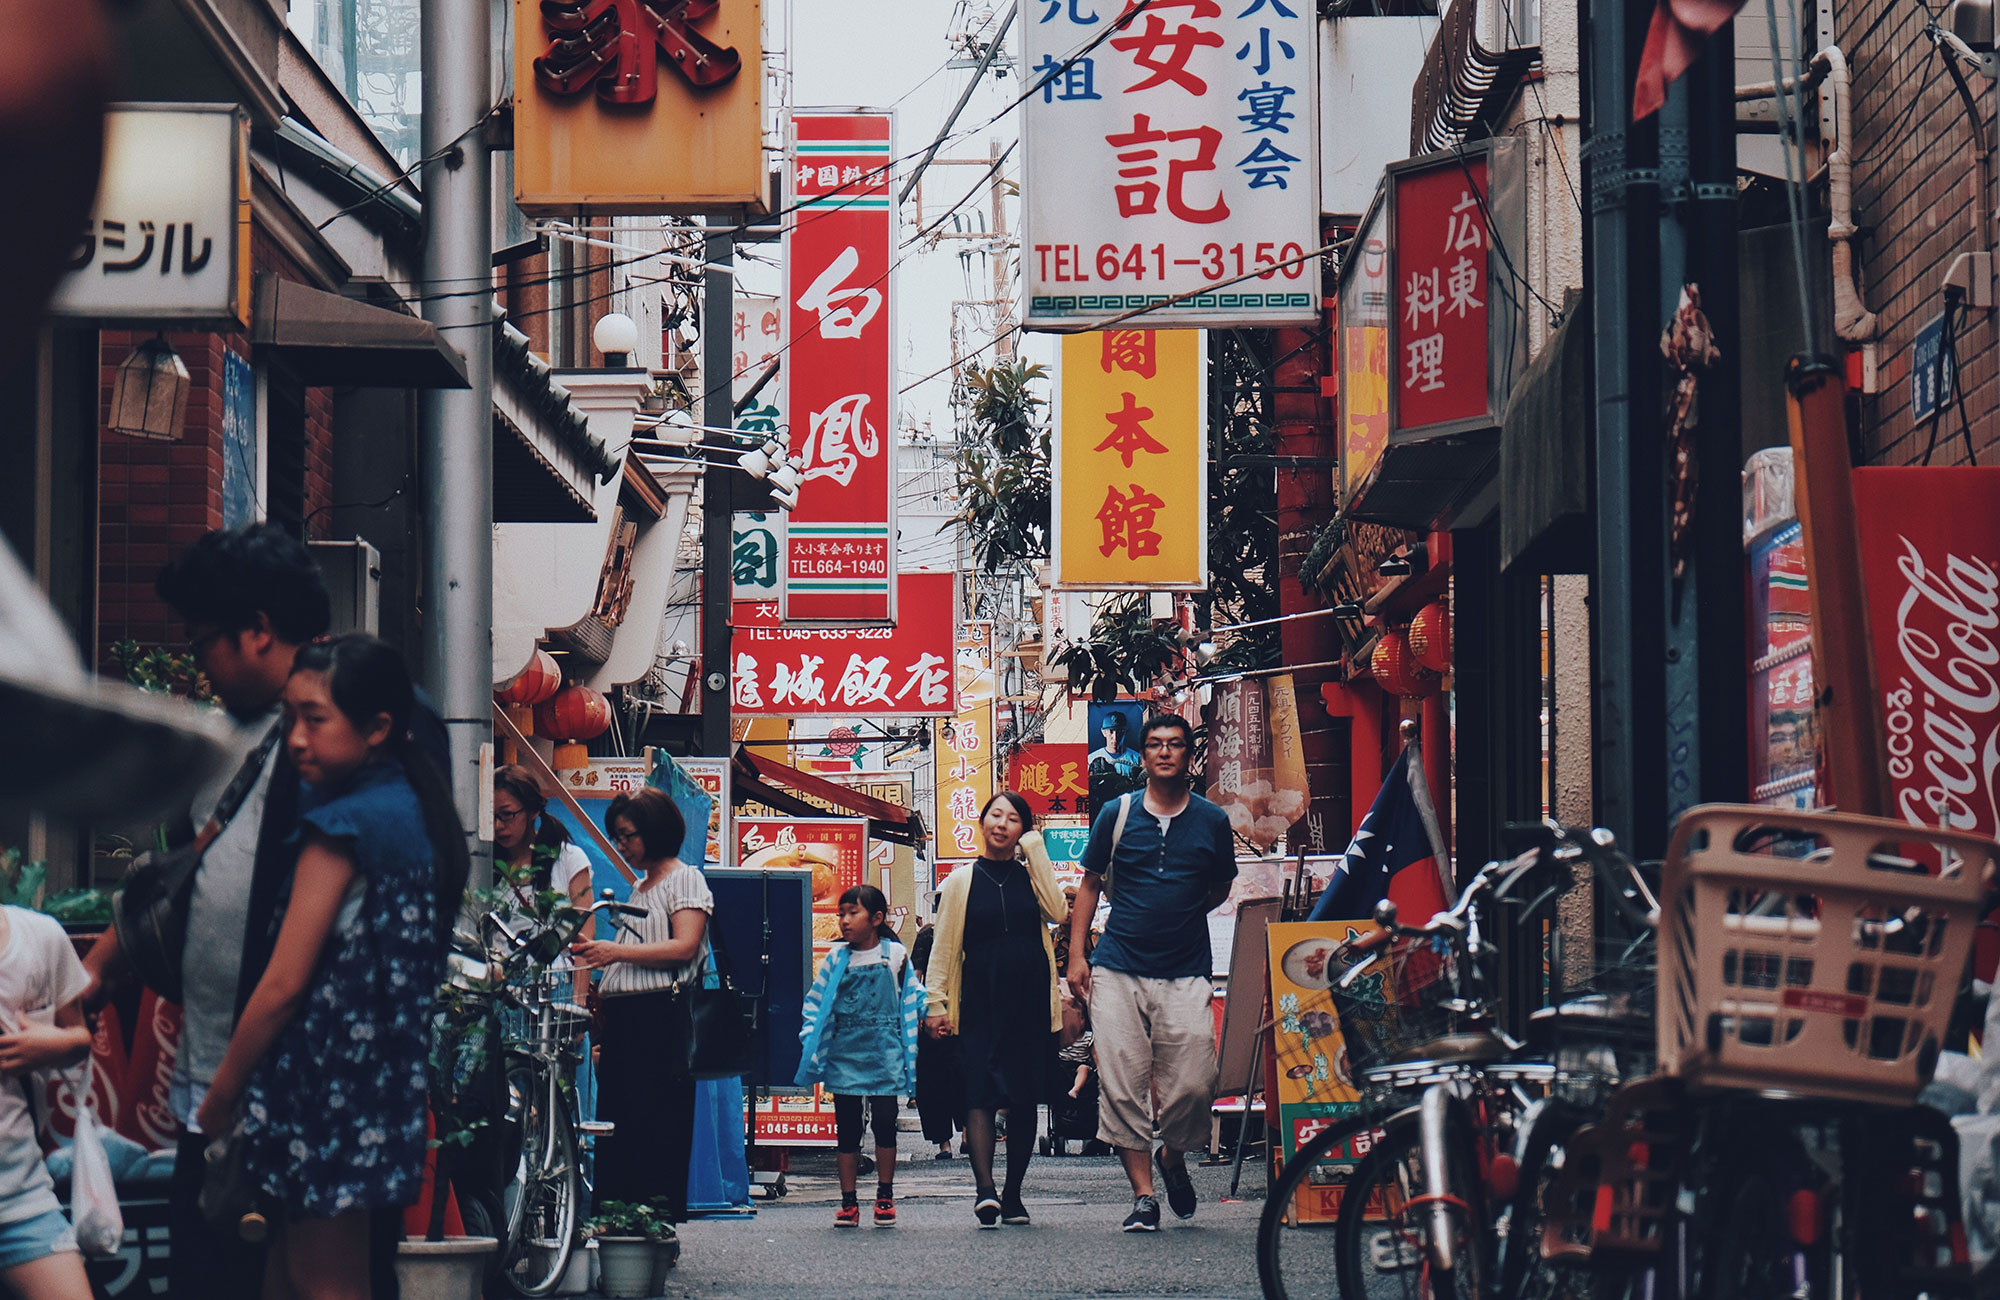 en hektisk gata i japan med massor av skyltar